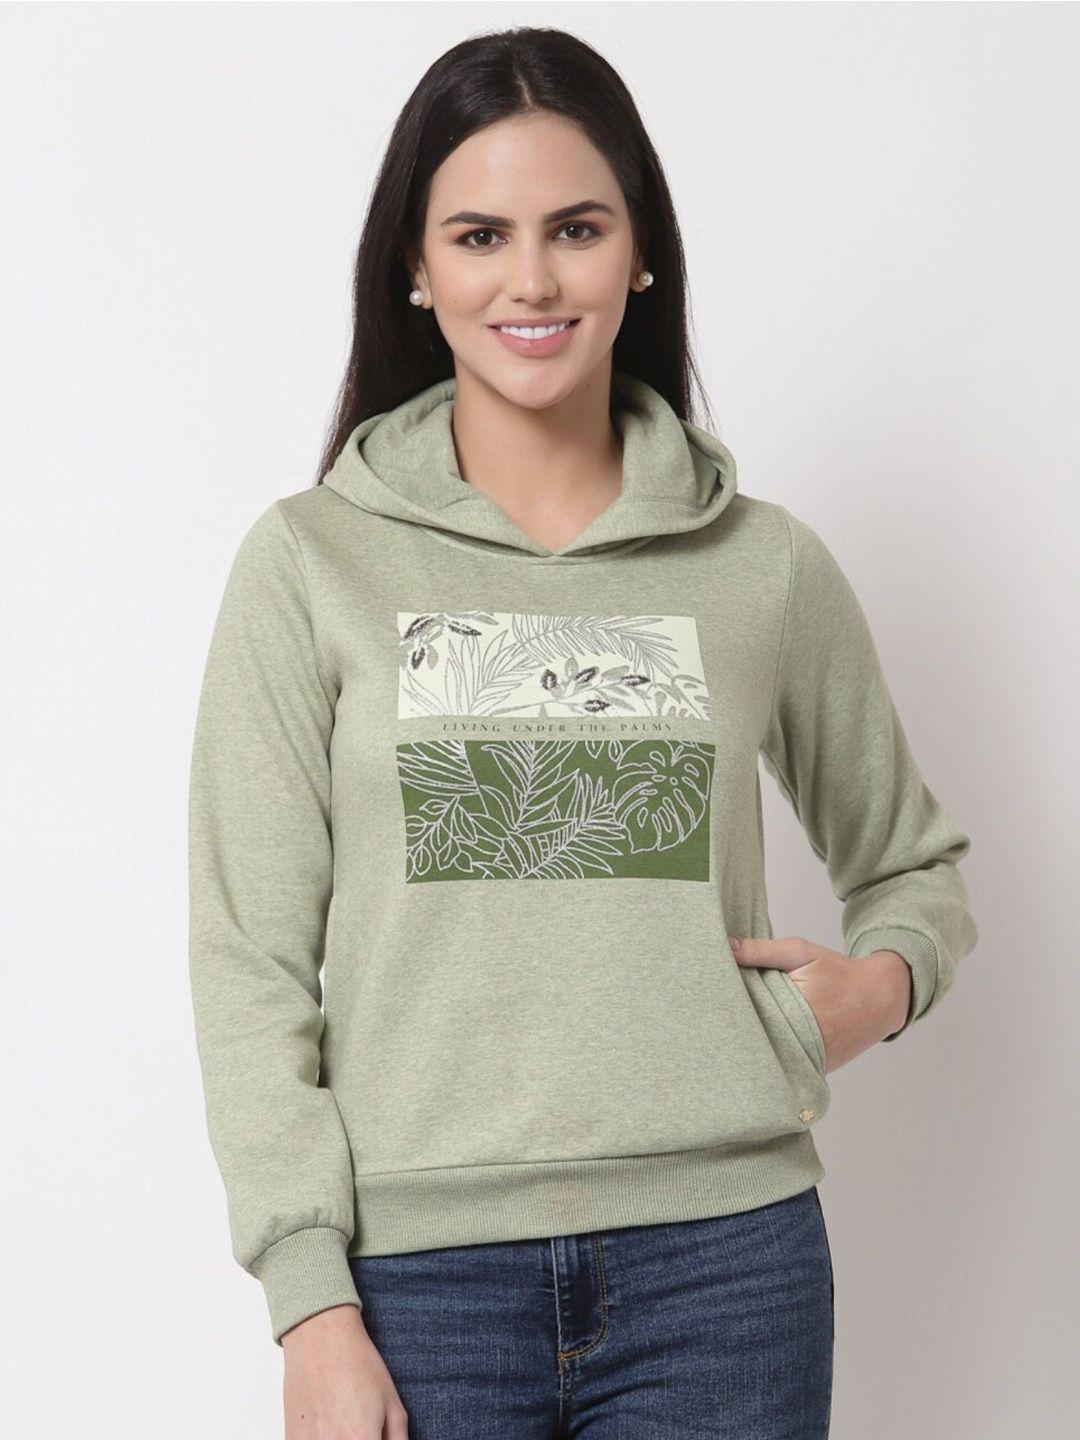 juelle women printed hooded pullover fleece sweatshirt